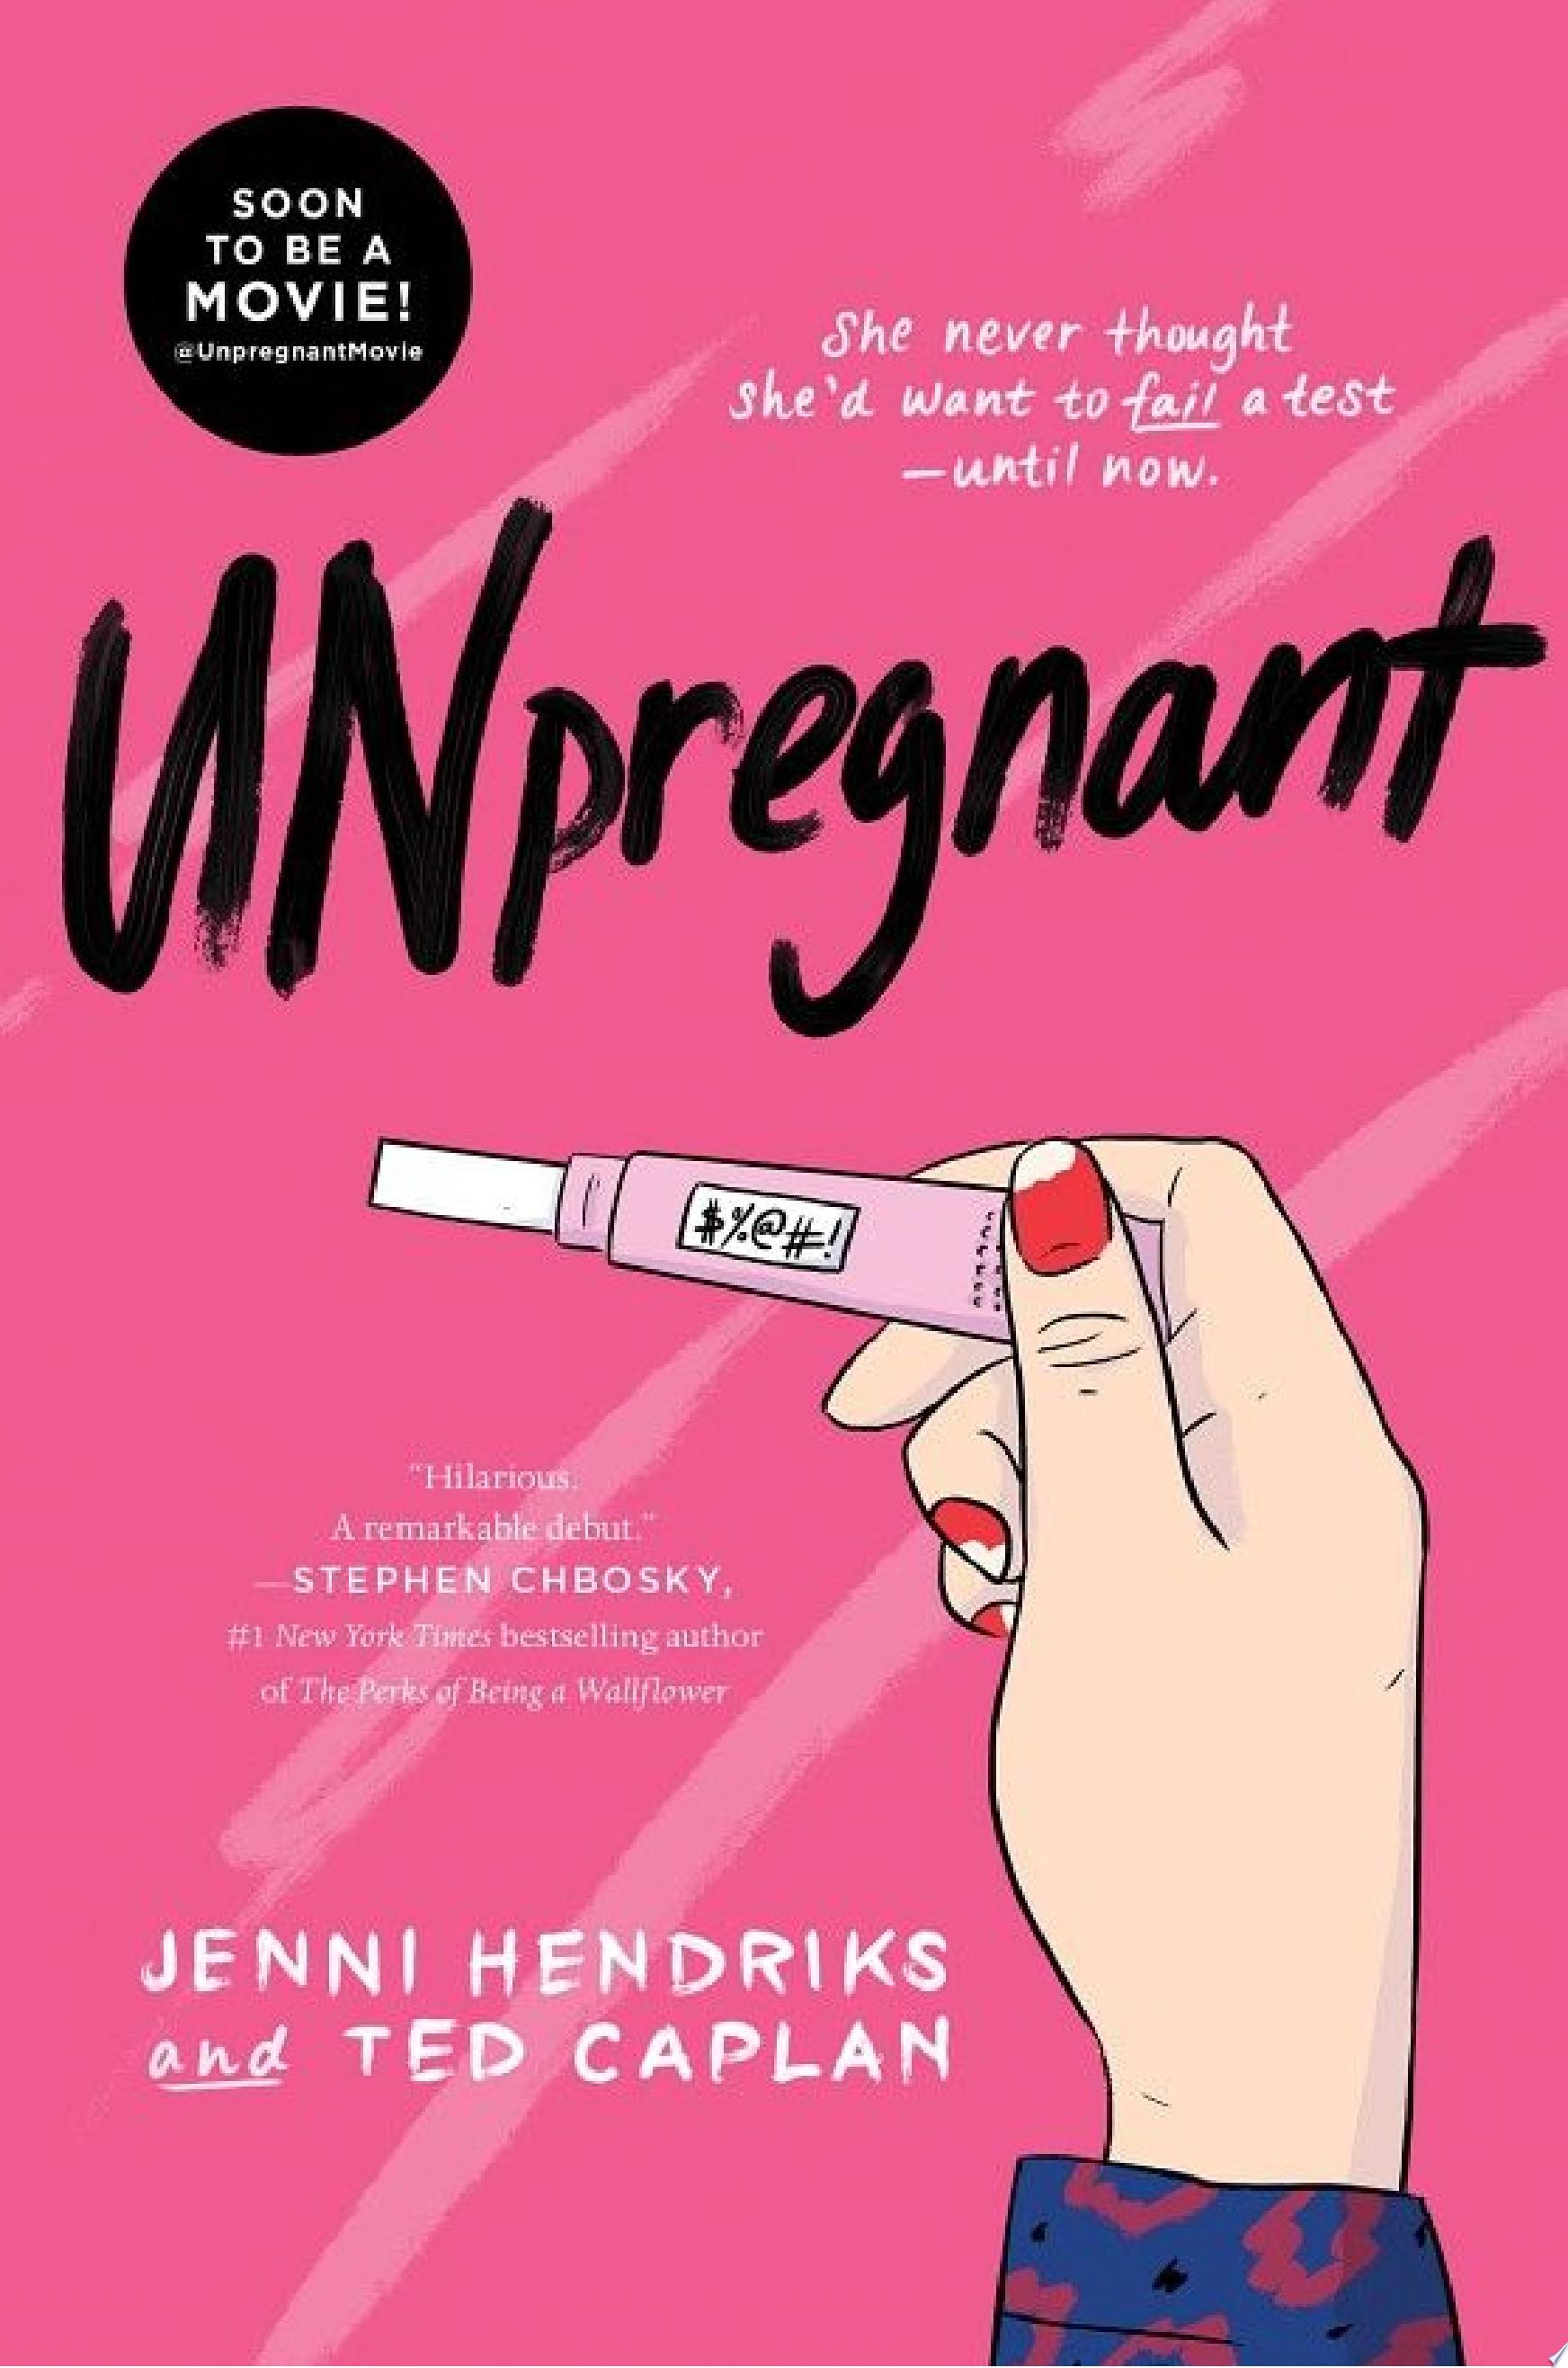 Image for "Unpregnant"